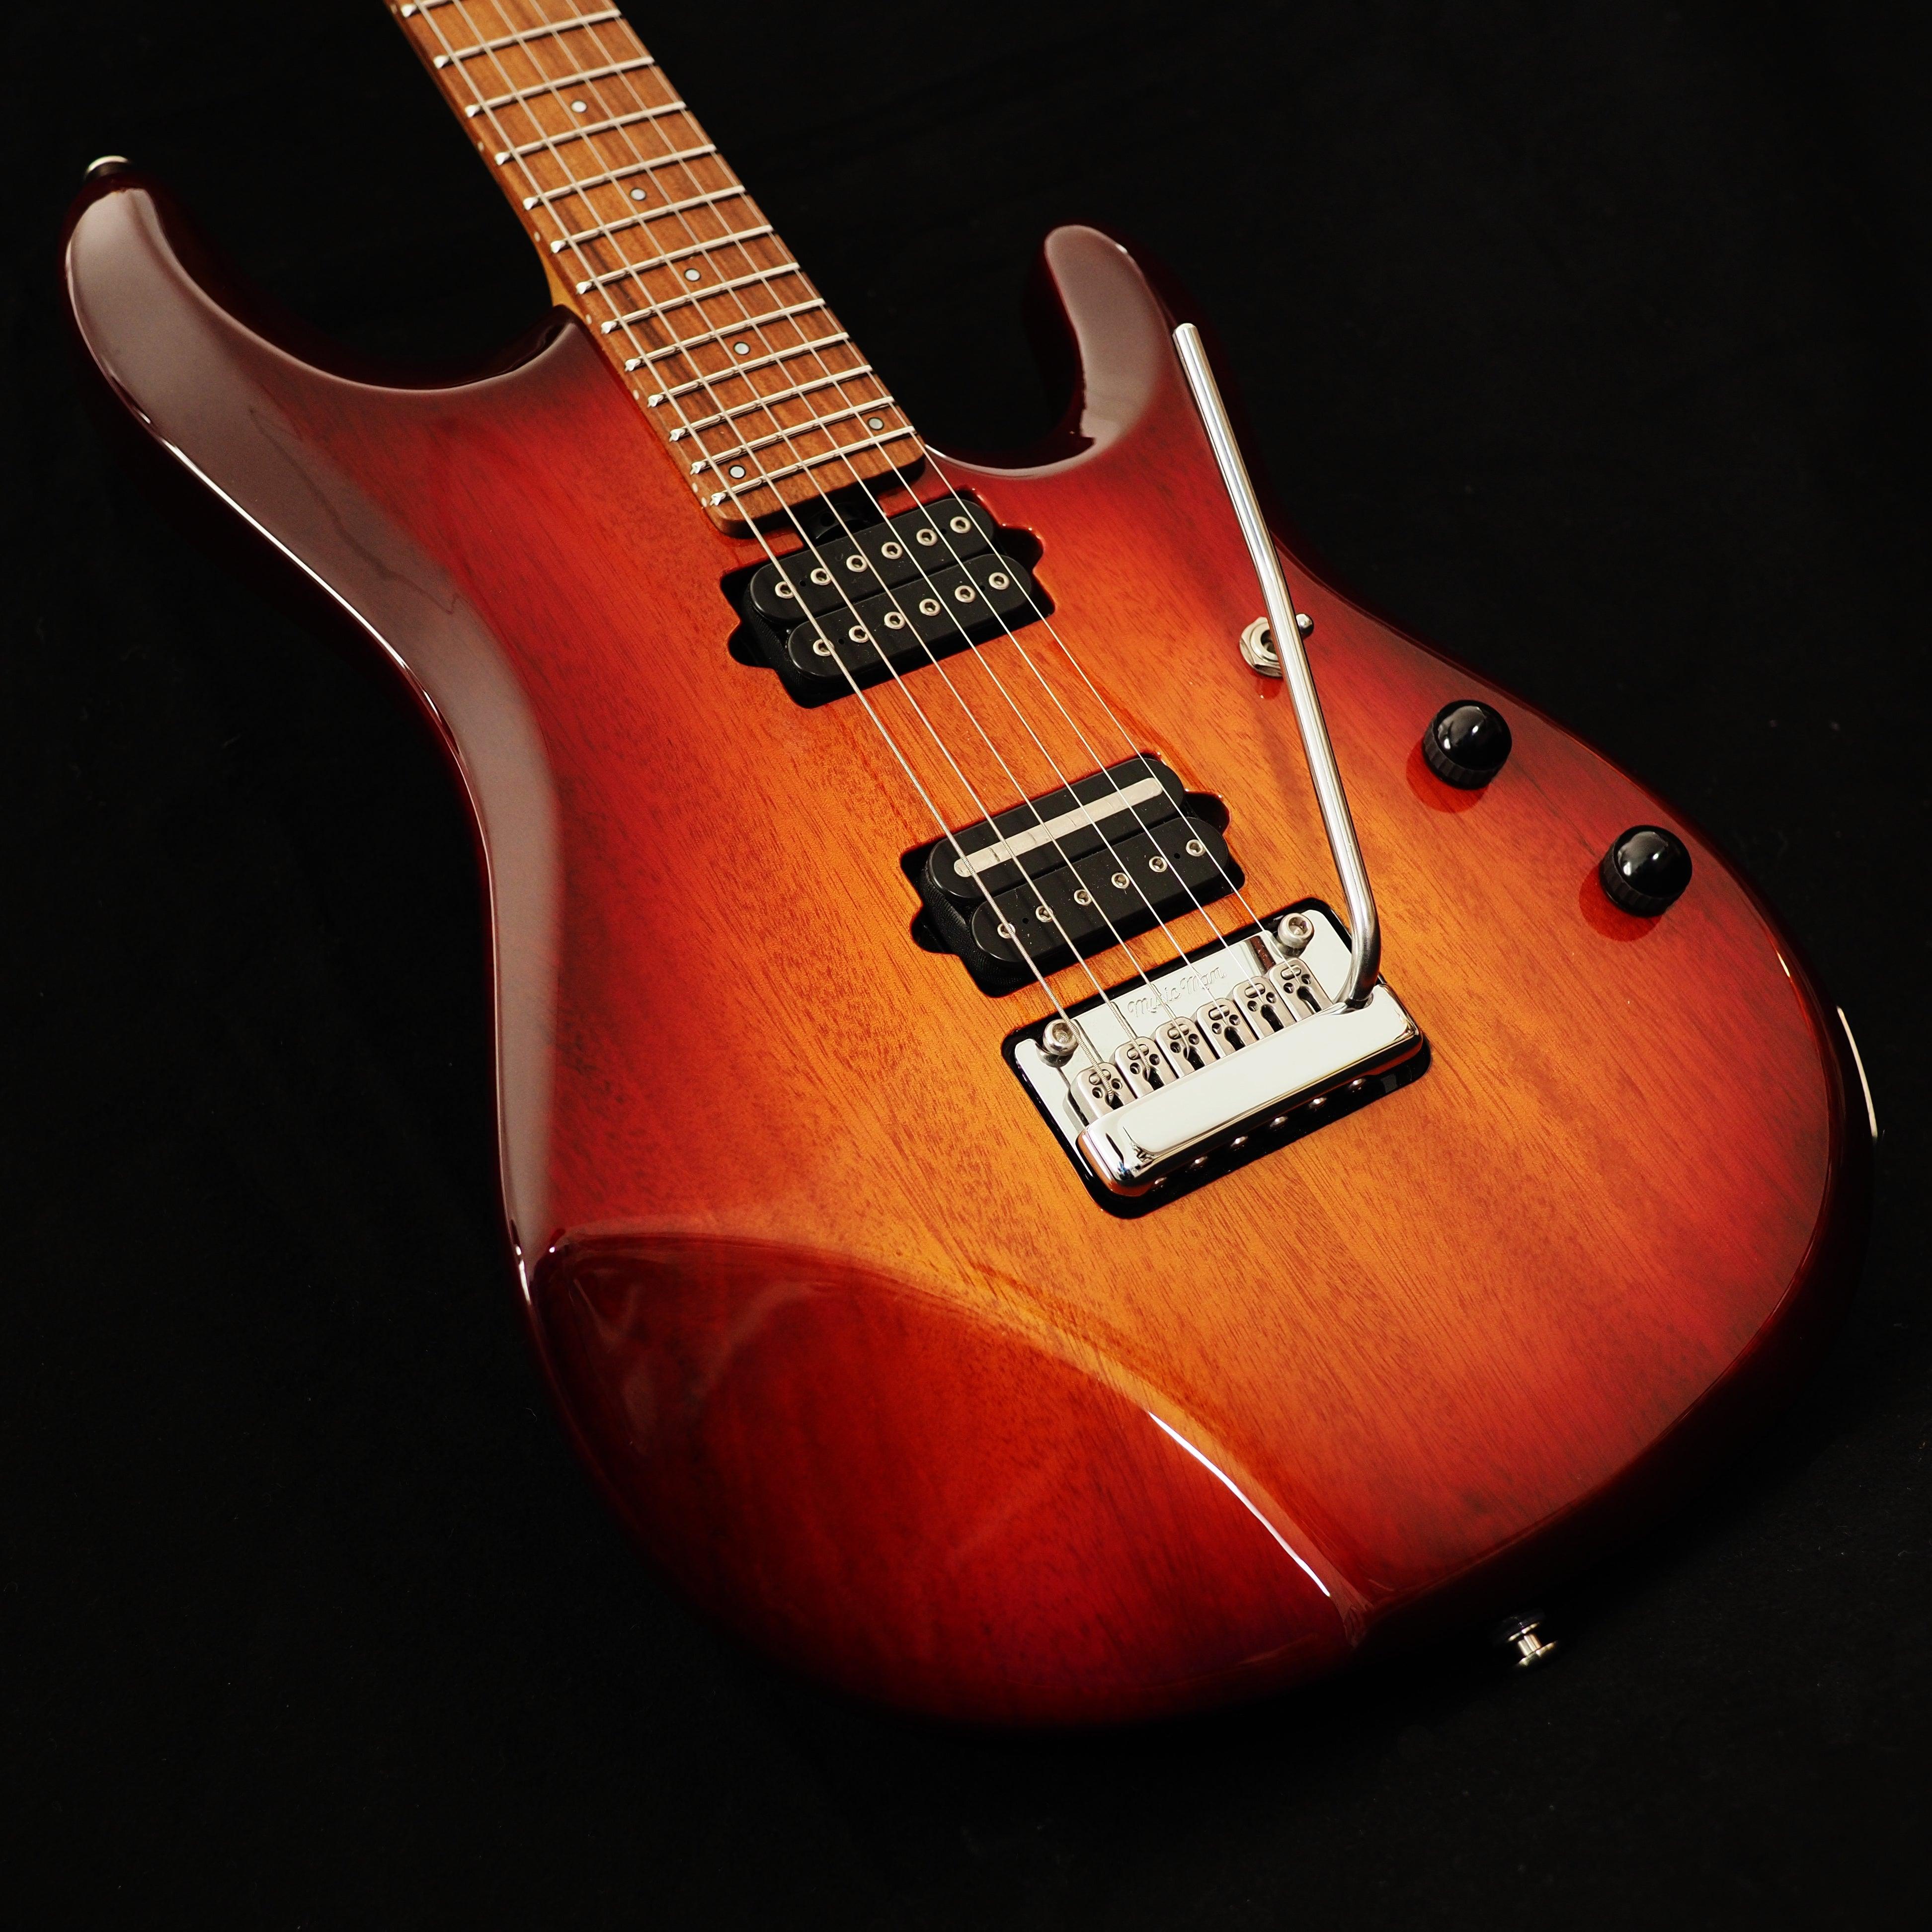 Ernie Ball Music Man JP6 Petrucci PDN Honey Burst Limited Edition - wurst.guitars